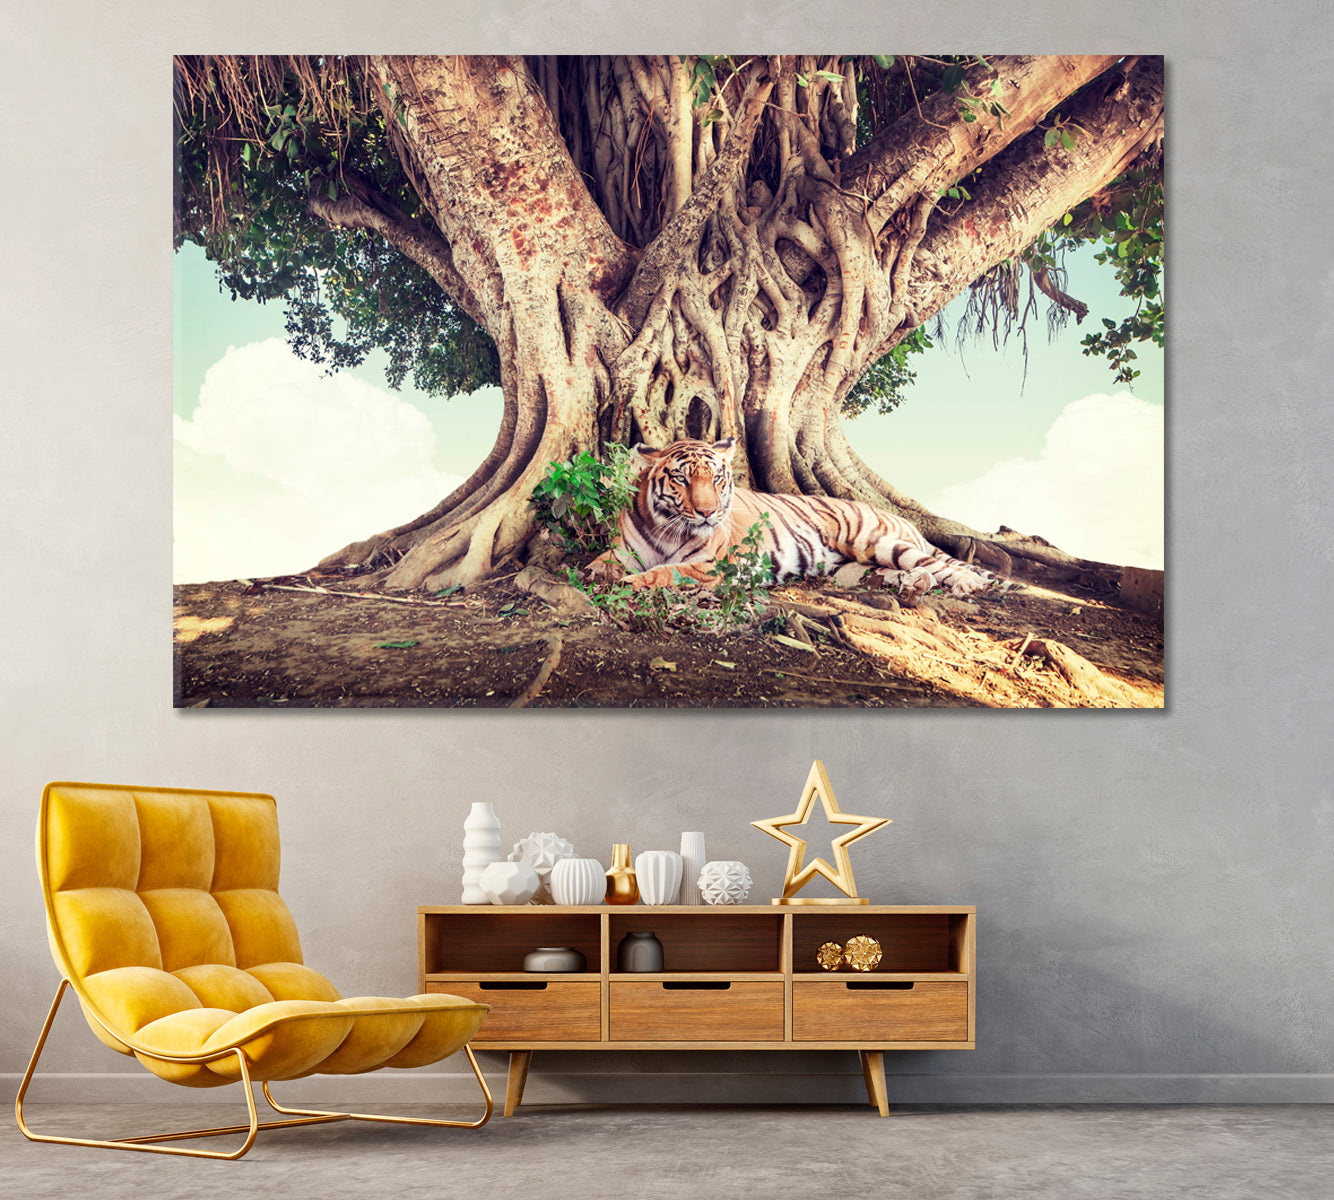 Tiger under Banyan Tree India Canvas Print ArtLexy 1 Panel 24"x16" inches 